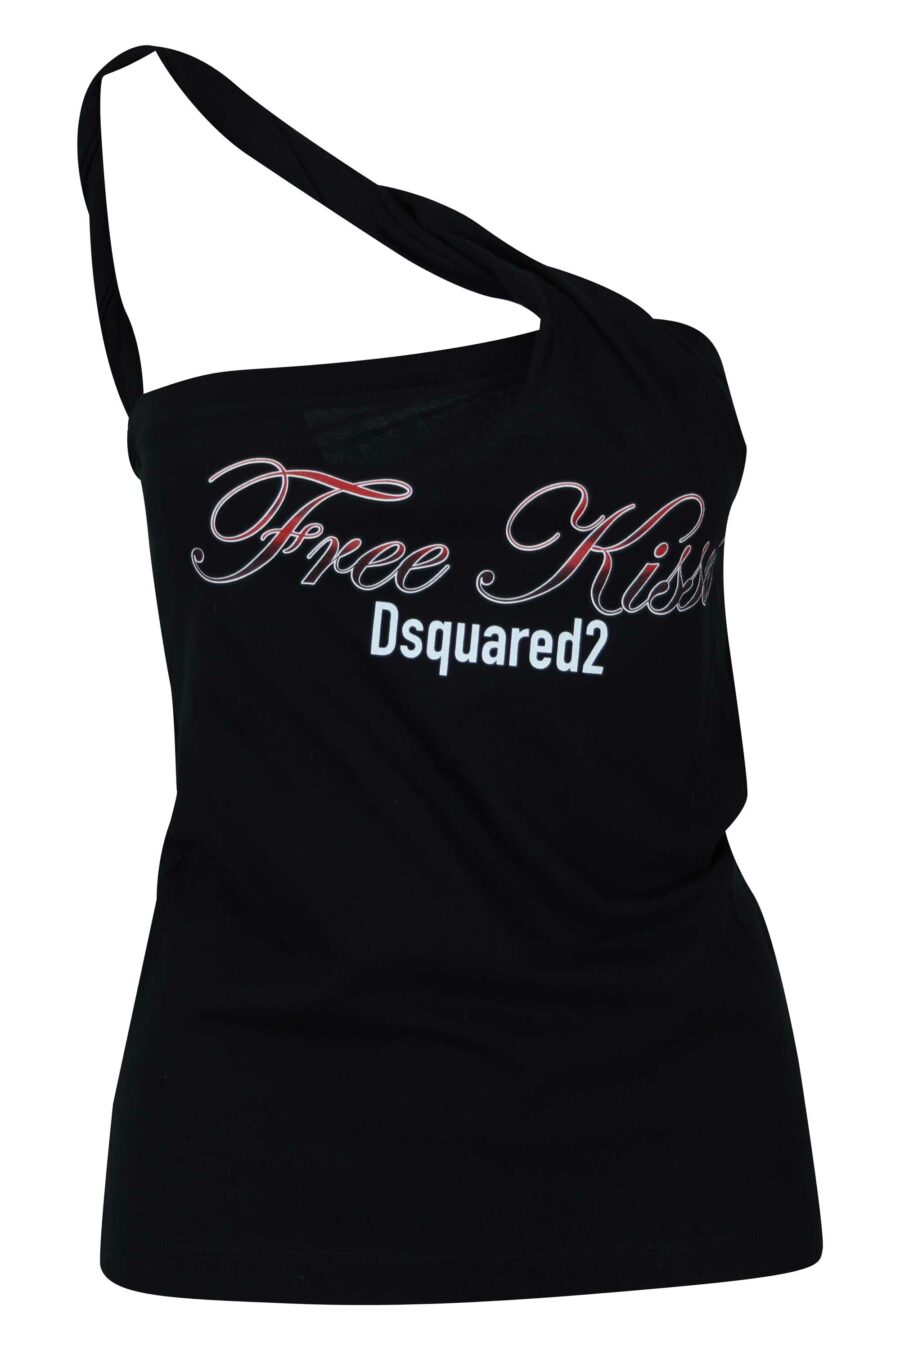 Camiseta negra sin mangas "free kiss" - 8054148495824